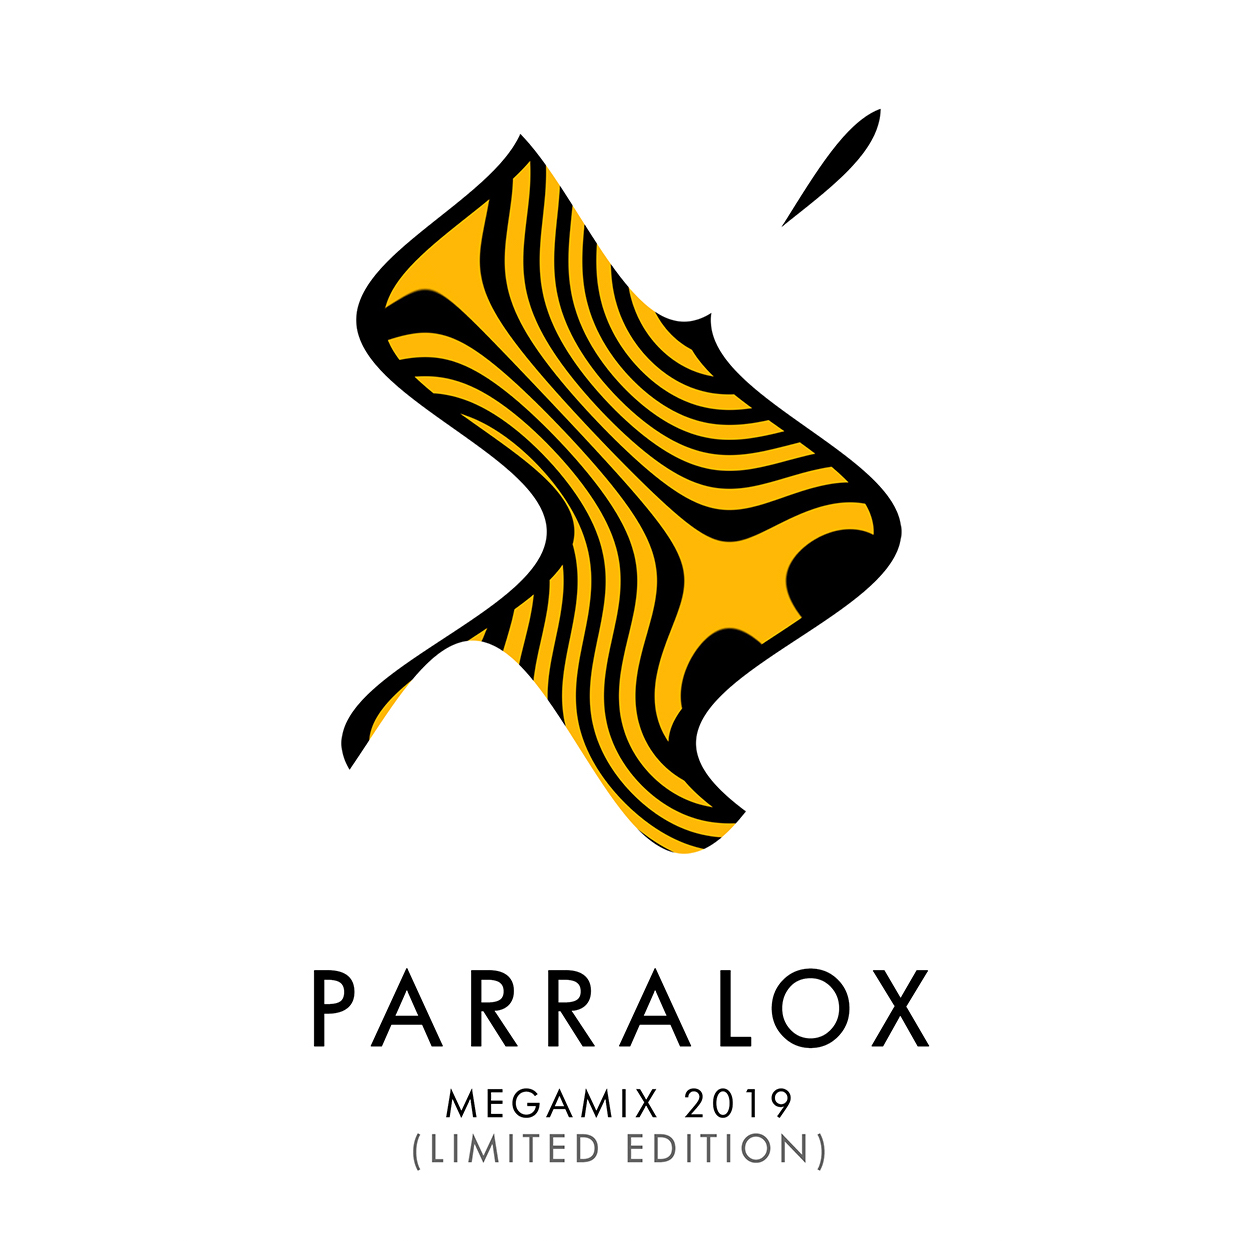 Parralox Megamix 2019